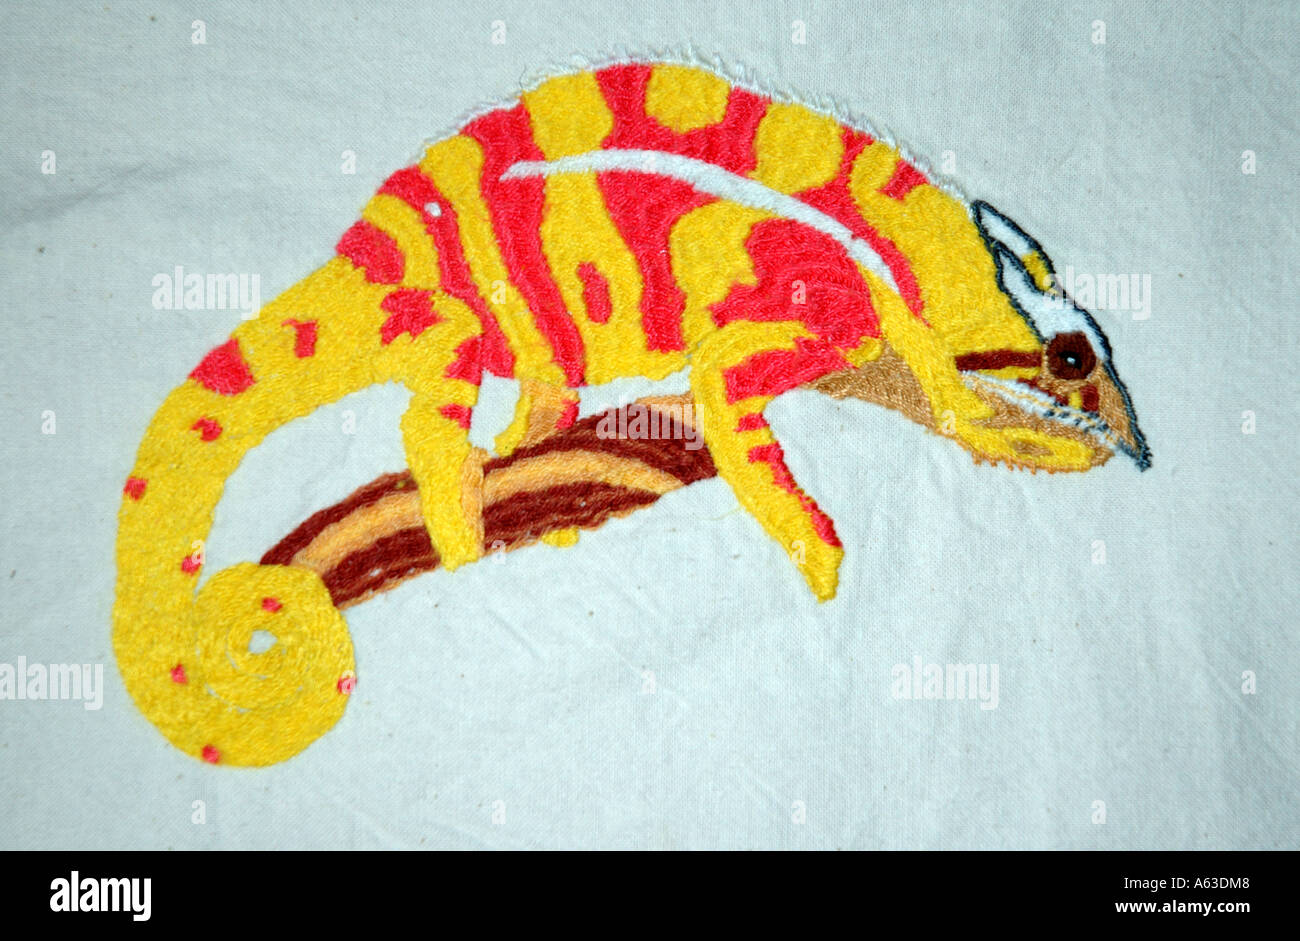 Hand embroidered chameleon Stock Photo